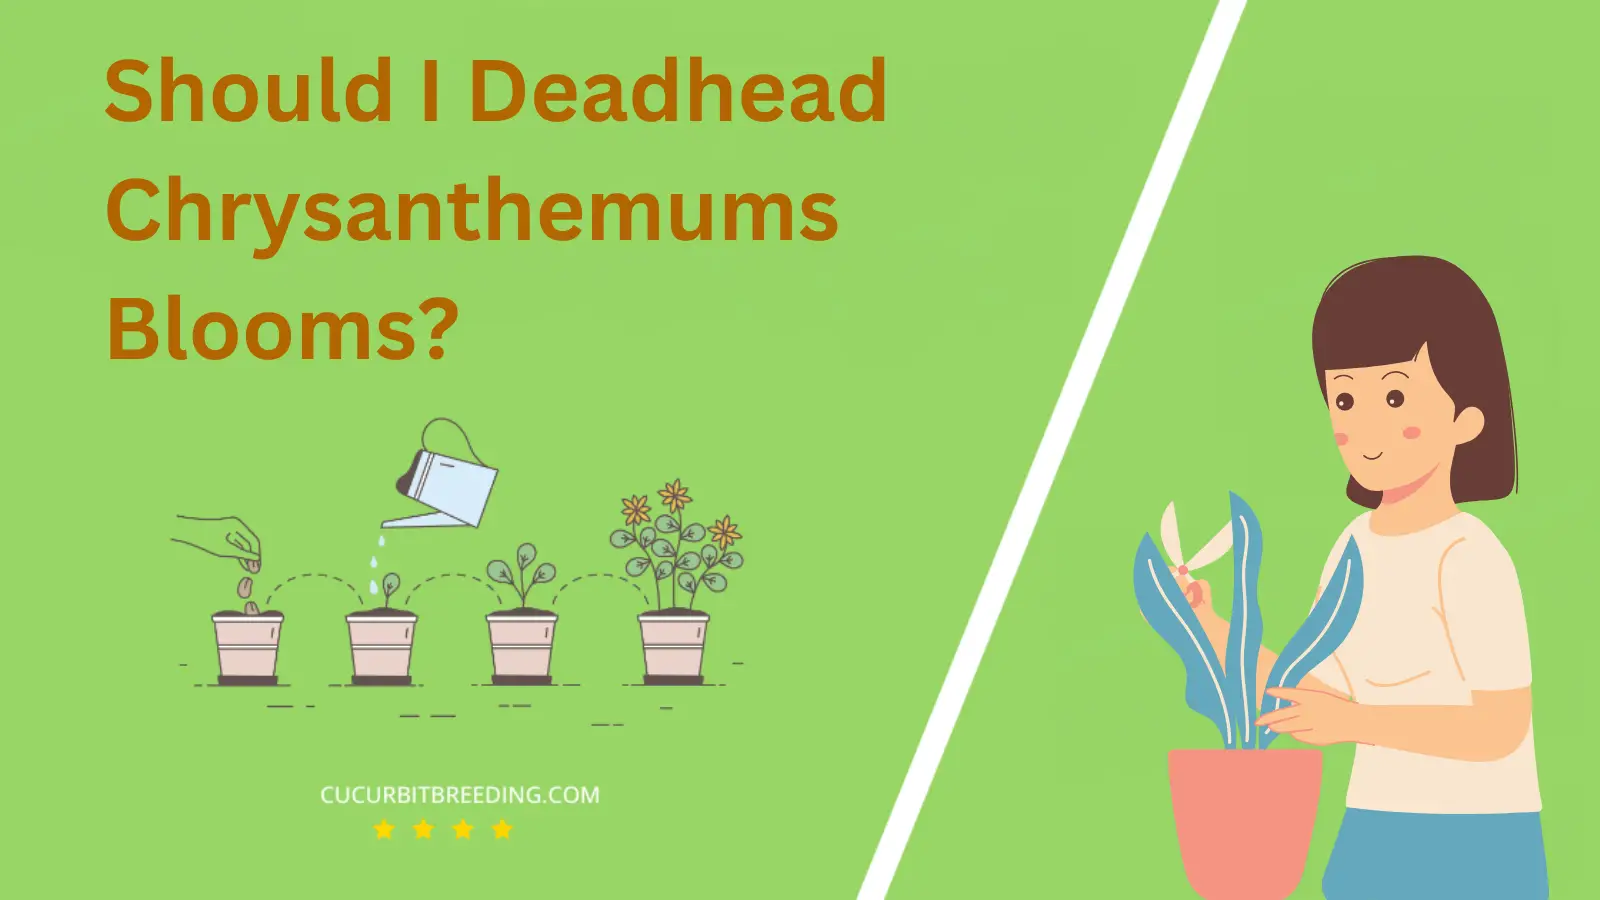 Should I Deadhead Chrysanthemums Blooms?